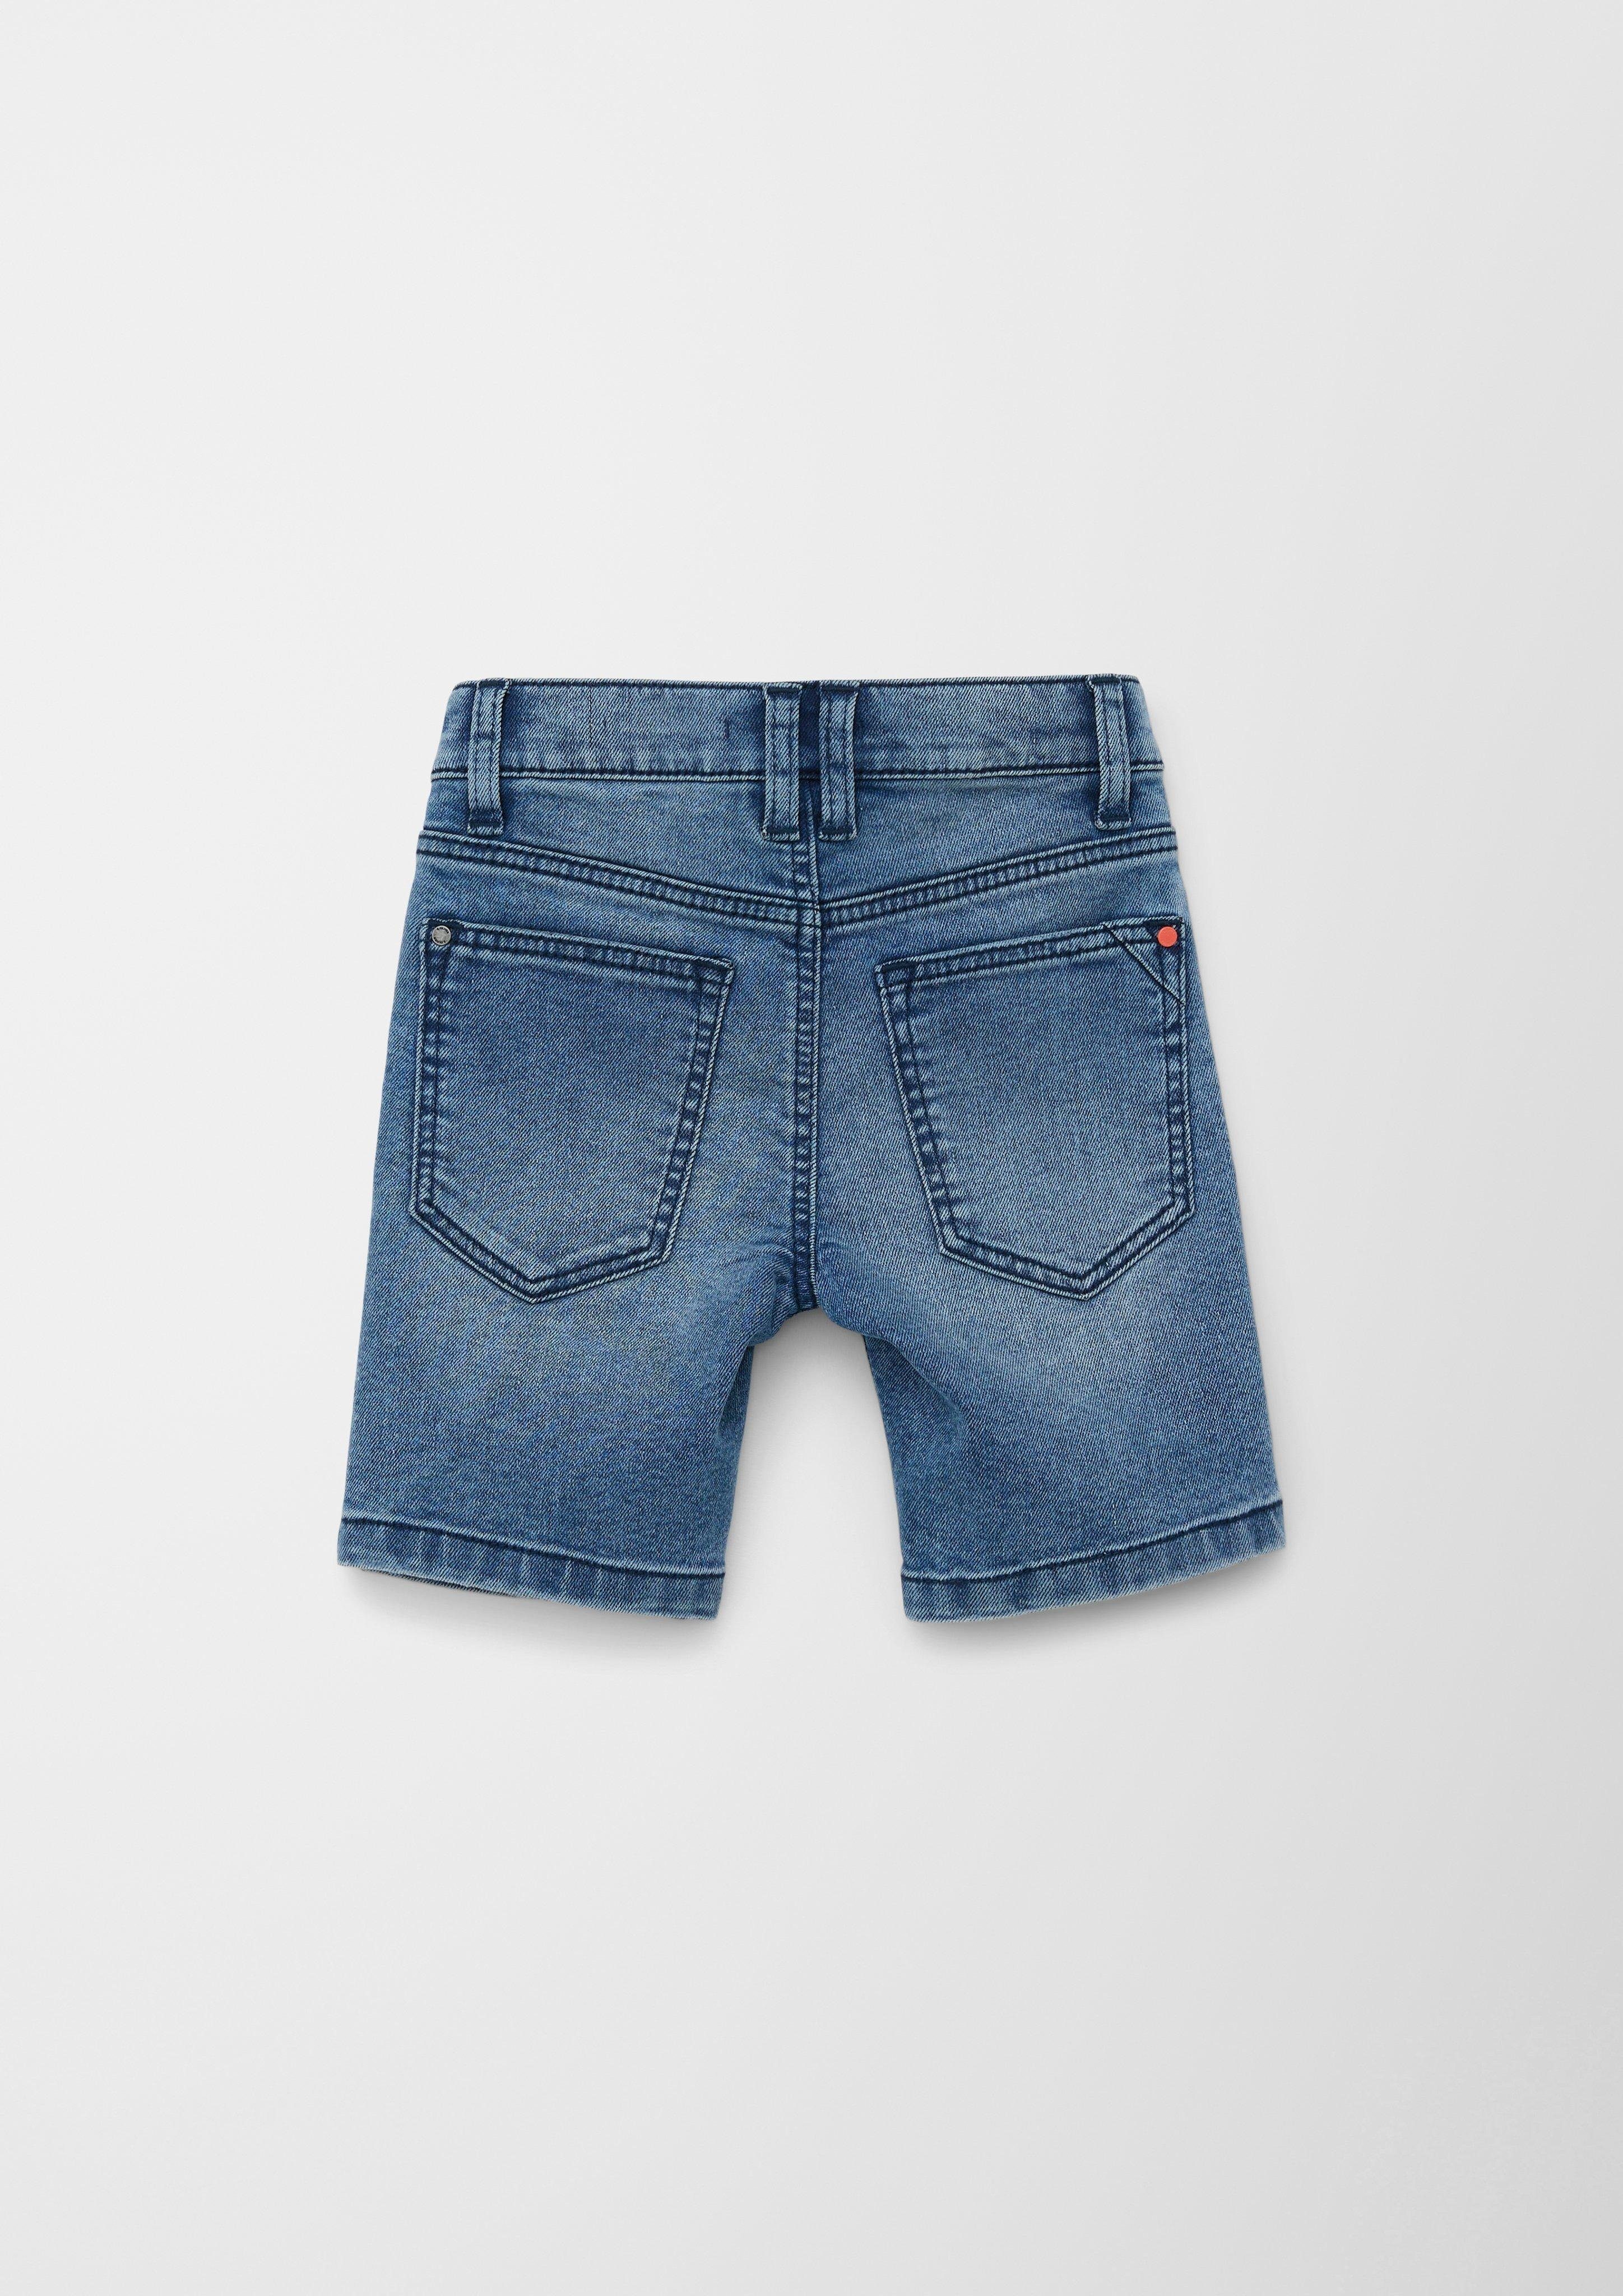 Leg Jeans-Bermuda Jeansshorts Fit Rise Slim Slim / Mid / Waschung s.Oliver Brad /